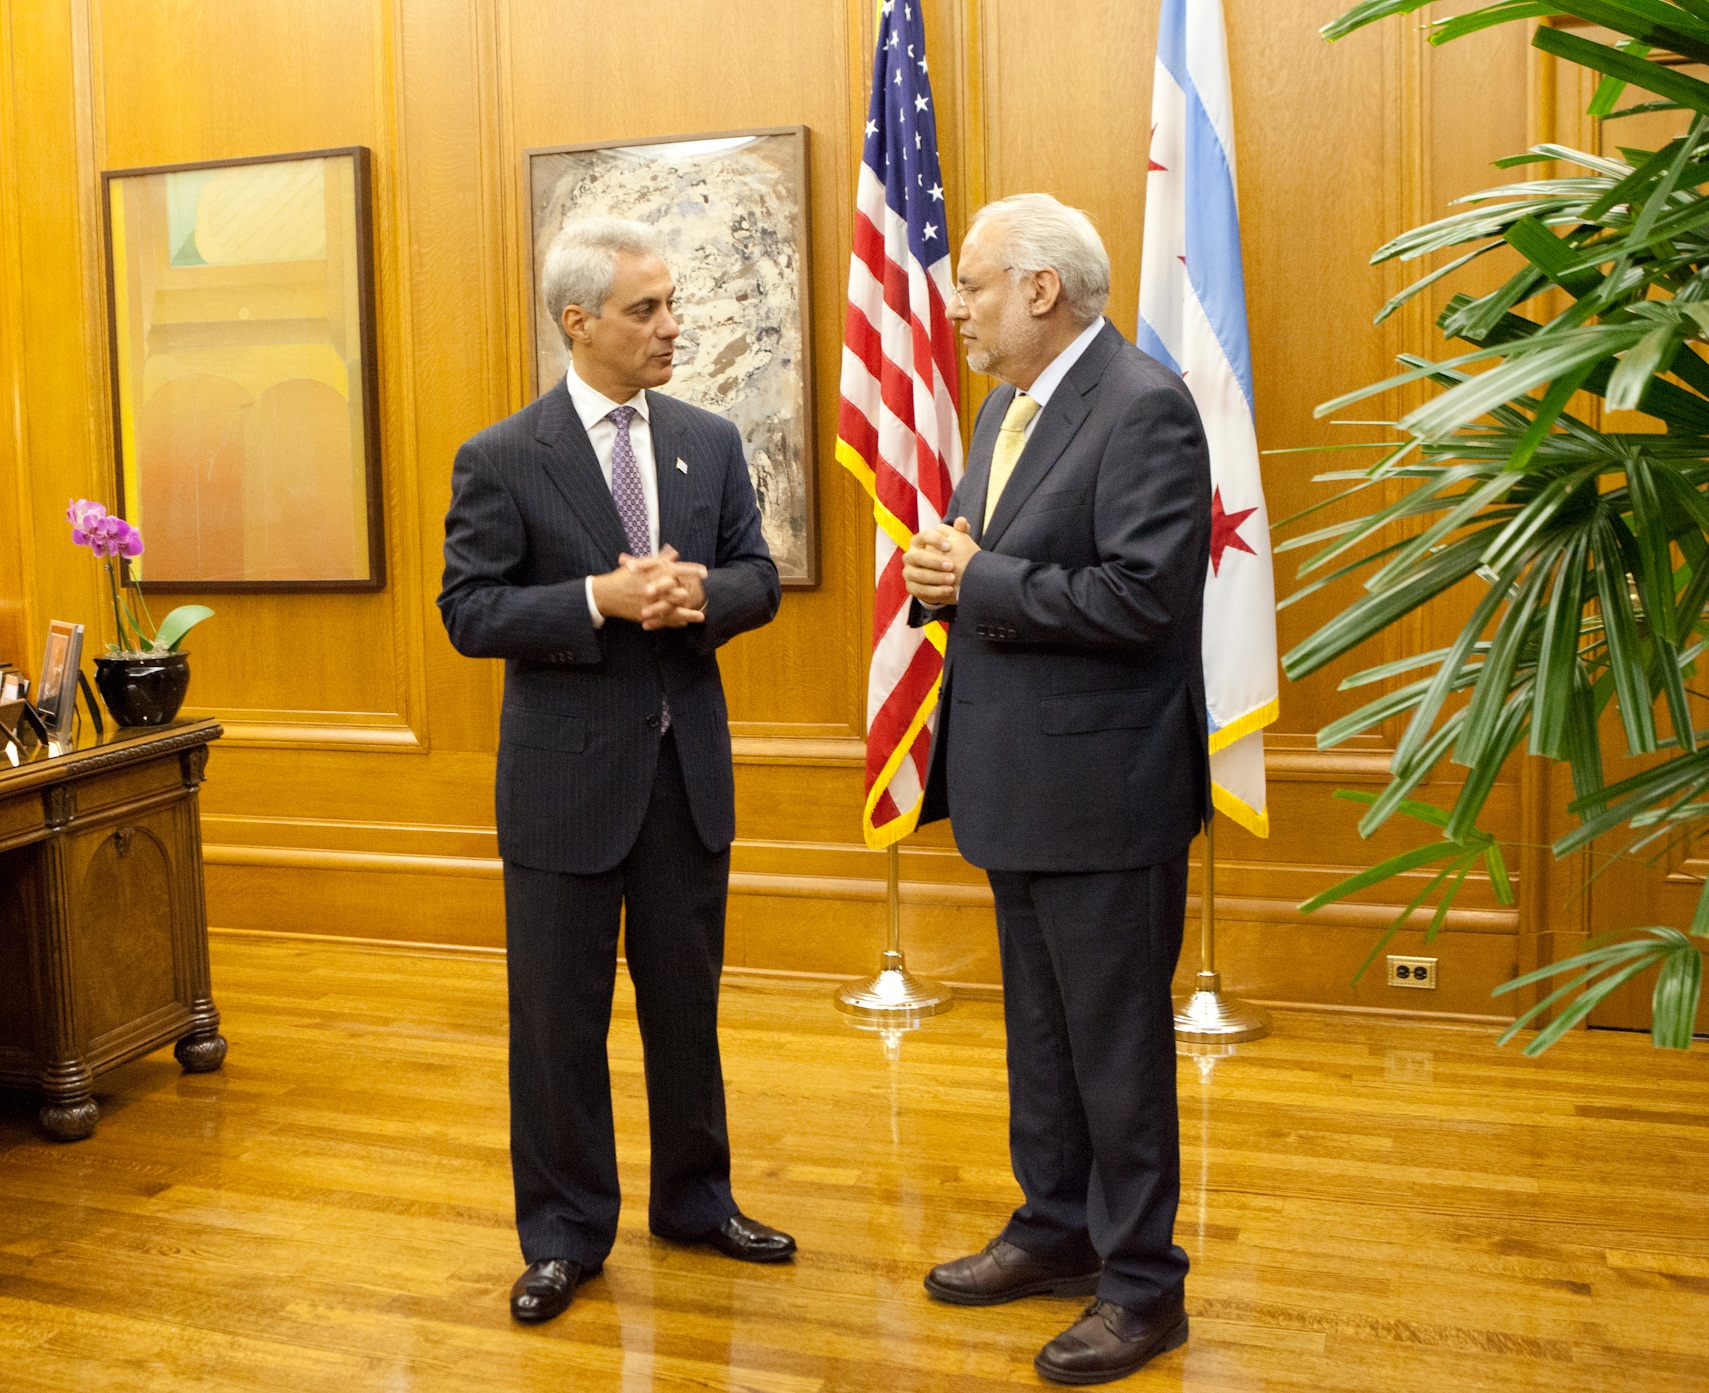 Mayor Emanuel welcomes Carlos Jiménez Macias, the new Consul General of Mexico to Chicago